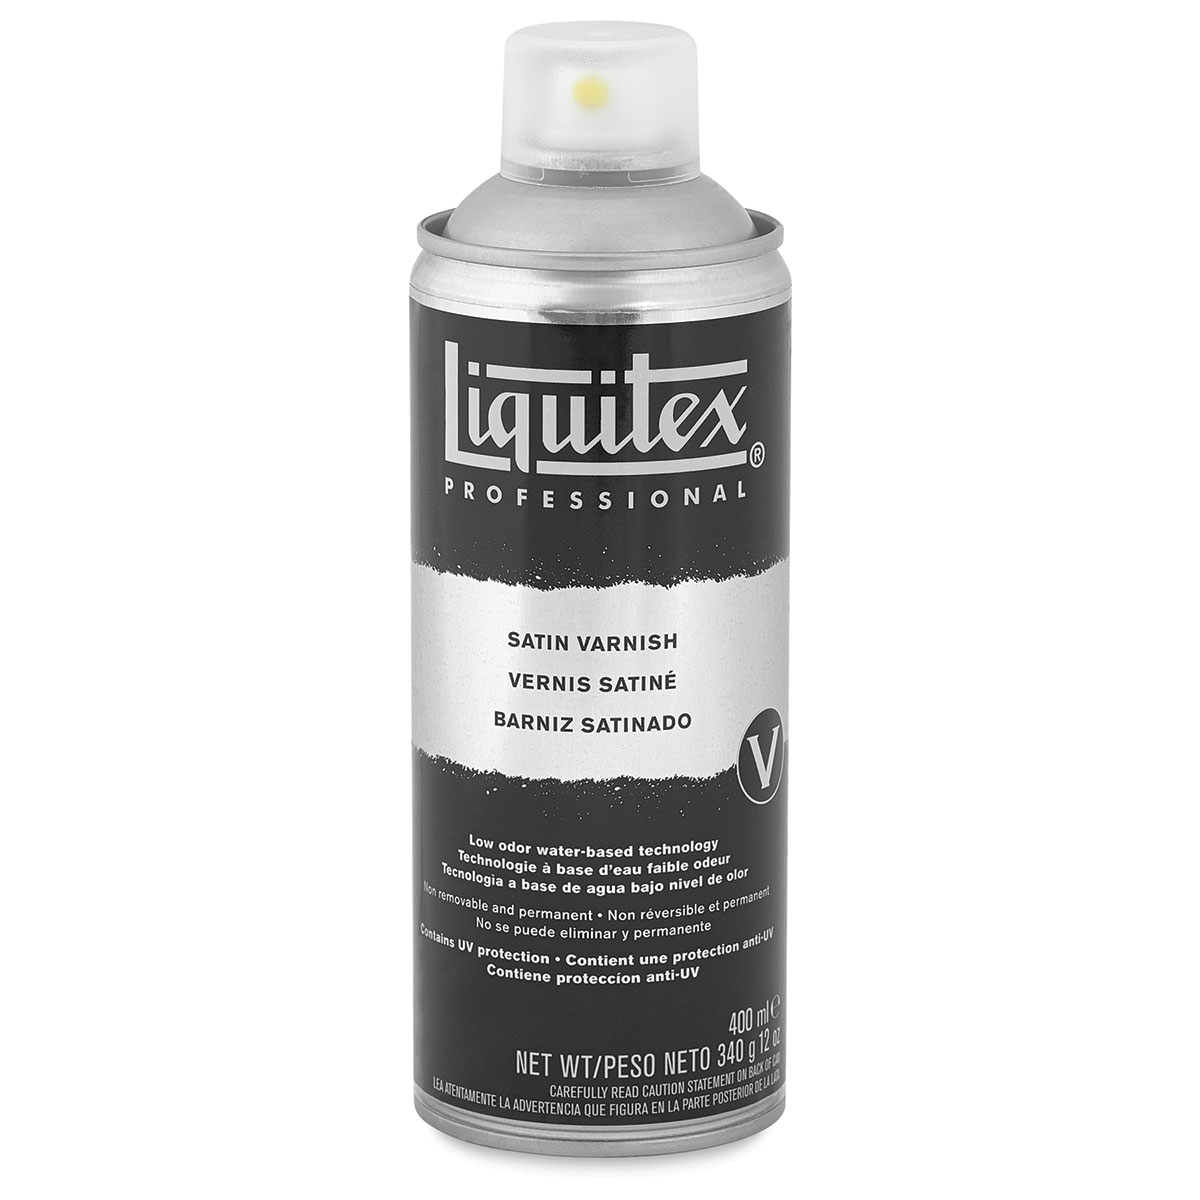 Liquitex Soluvar Varnish Spray - Gloss, 10.4 oz Spray Can